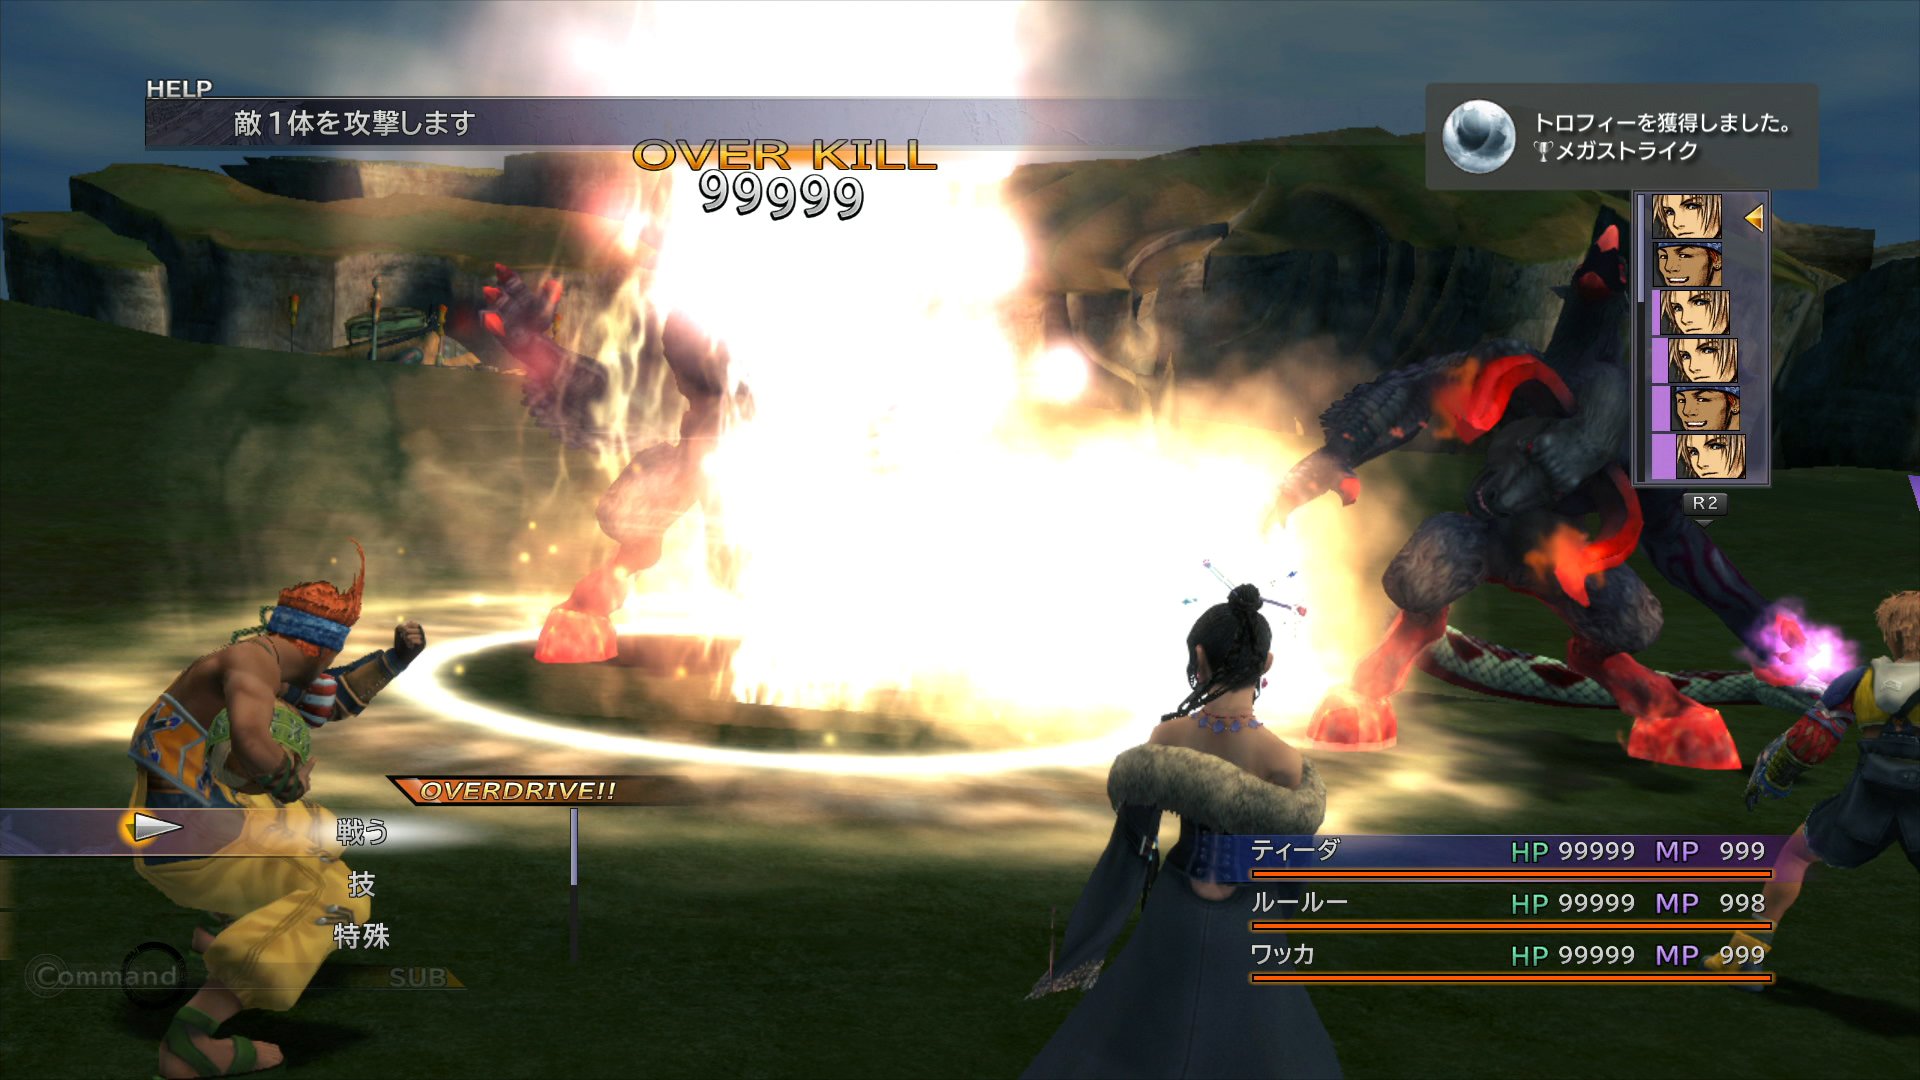 Final Fantasy X HD Remaster (Japan Import)